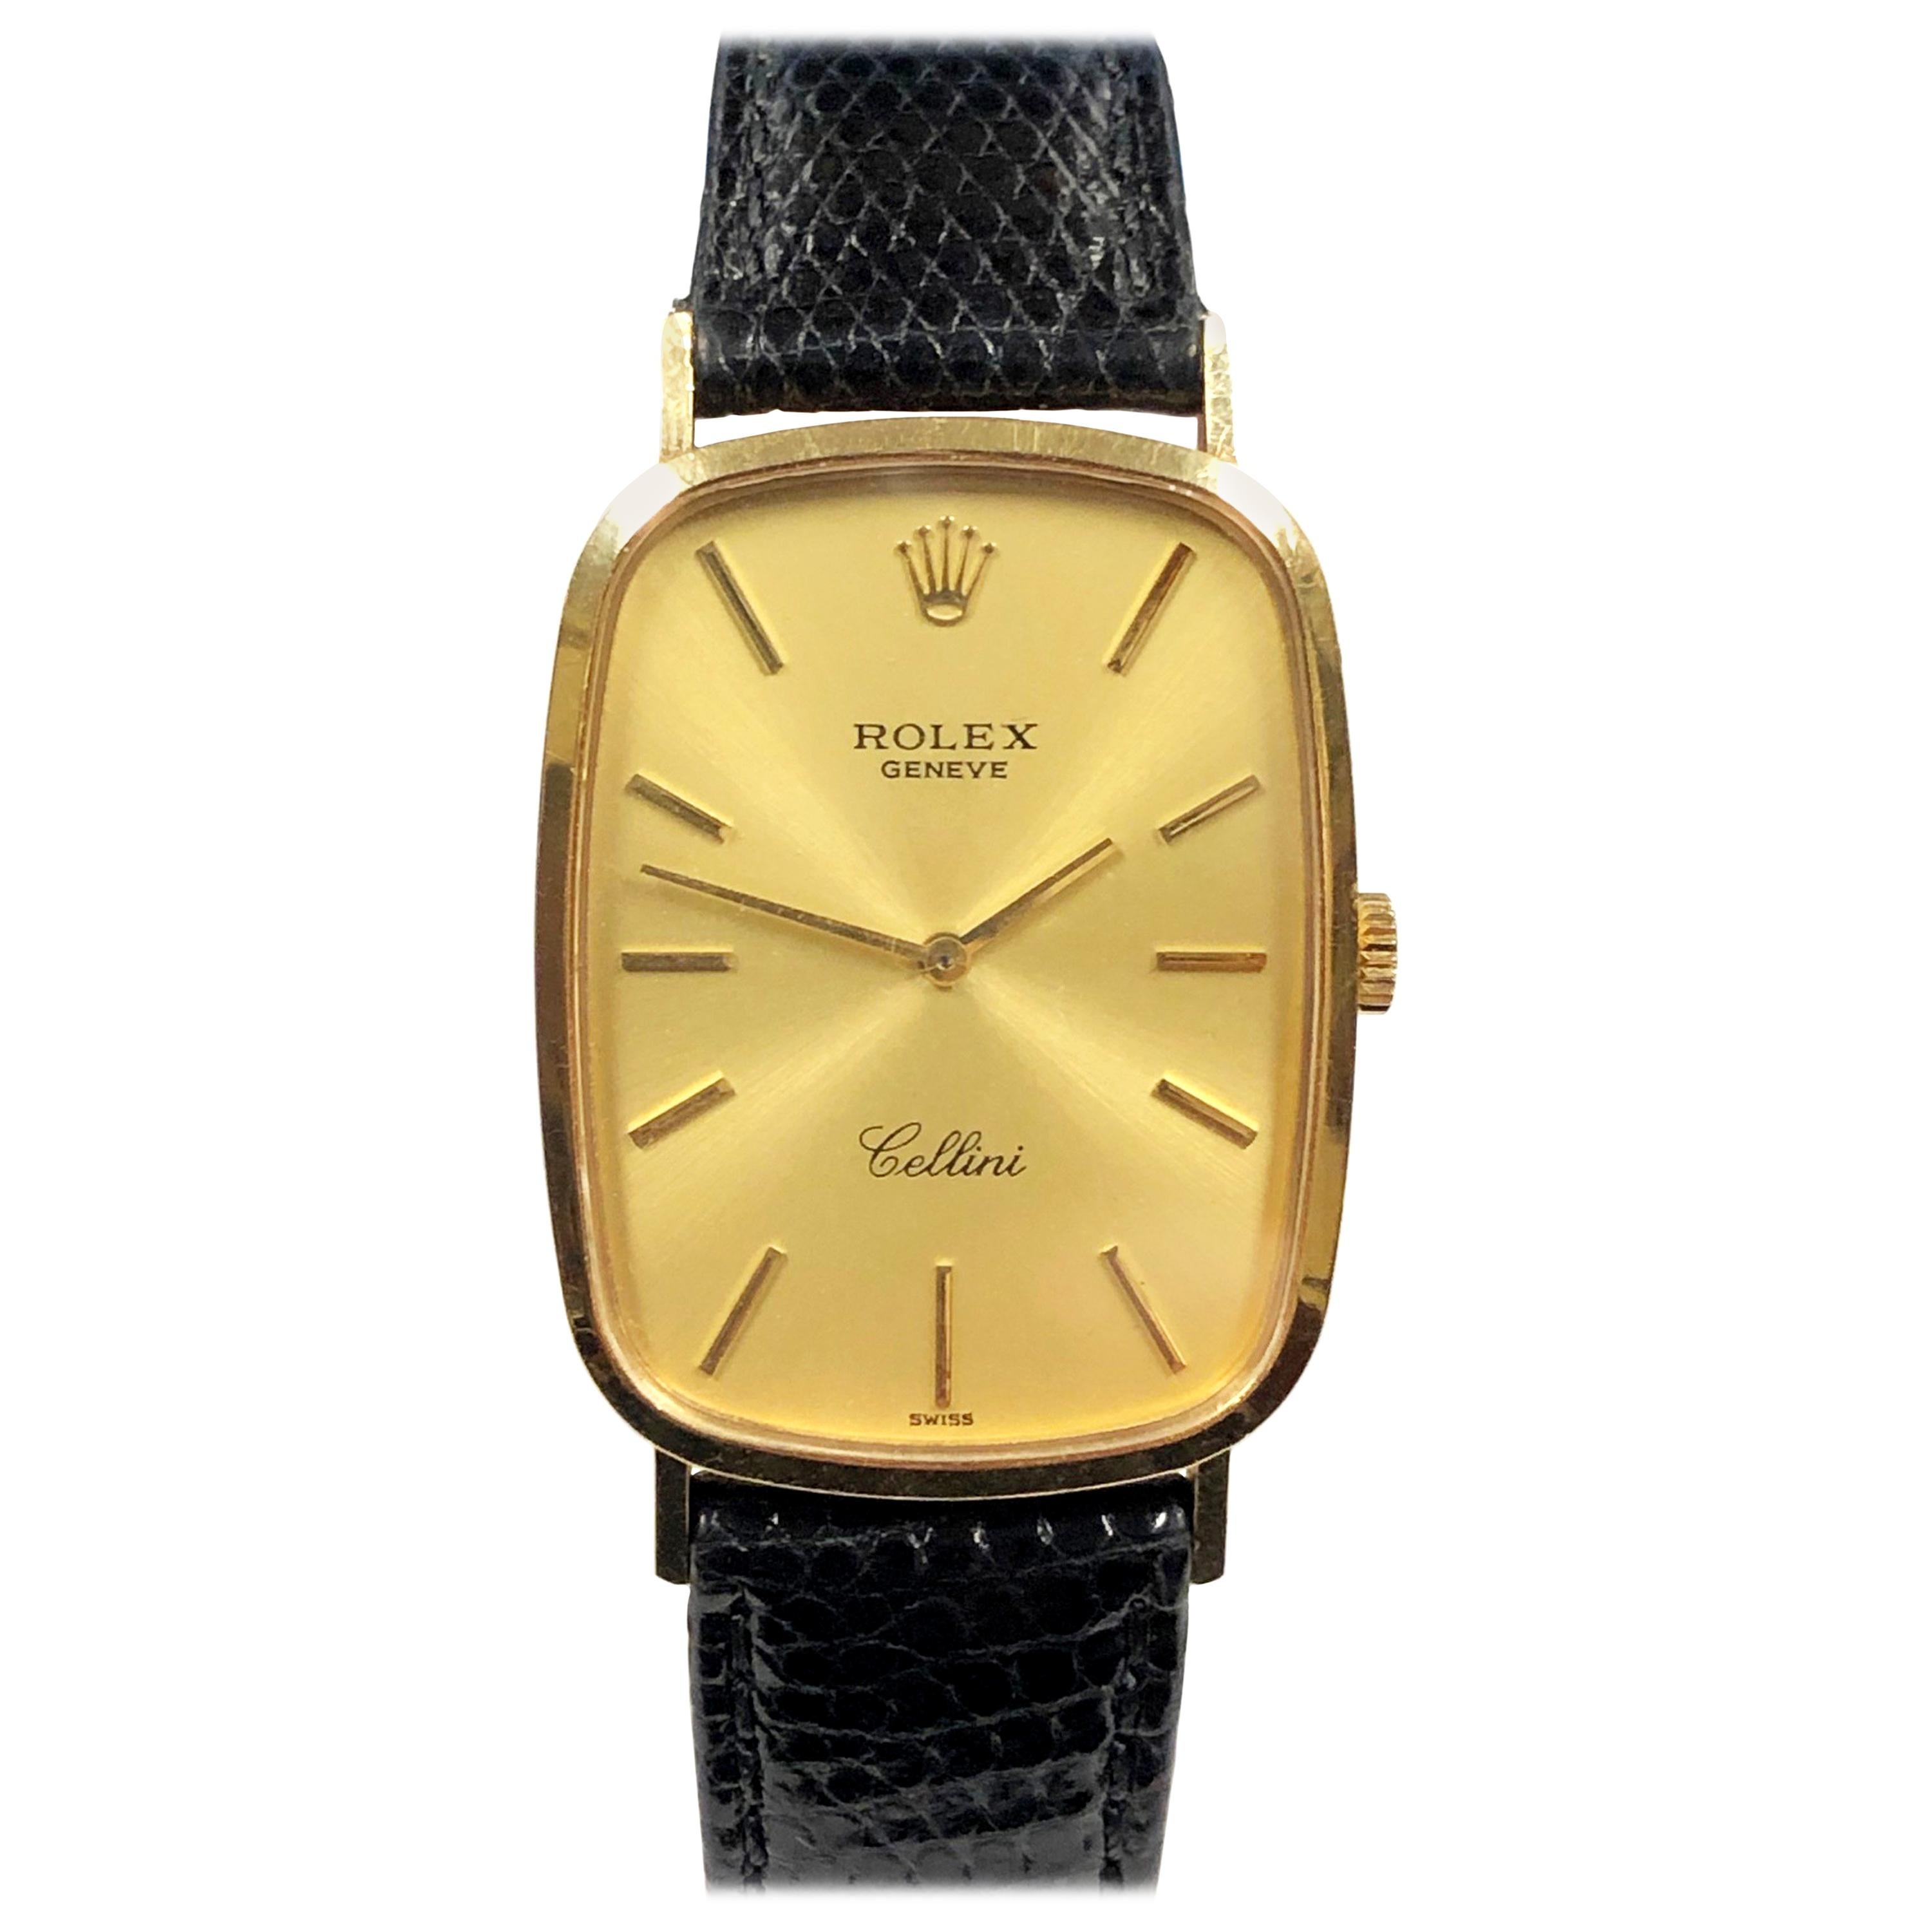 Rolex Cellini Ref 4113 Mechanical Yellow Gold Wristwatch